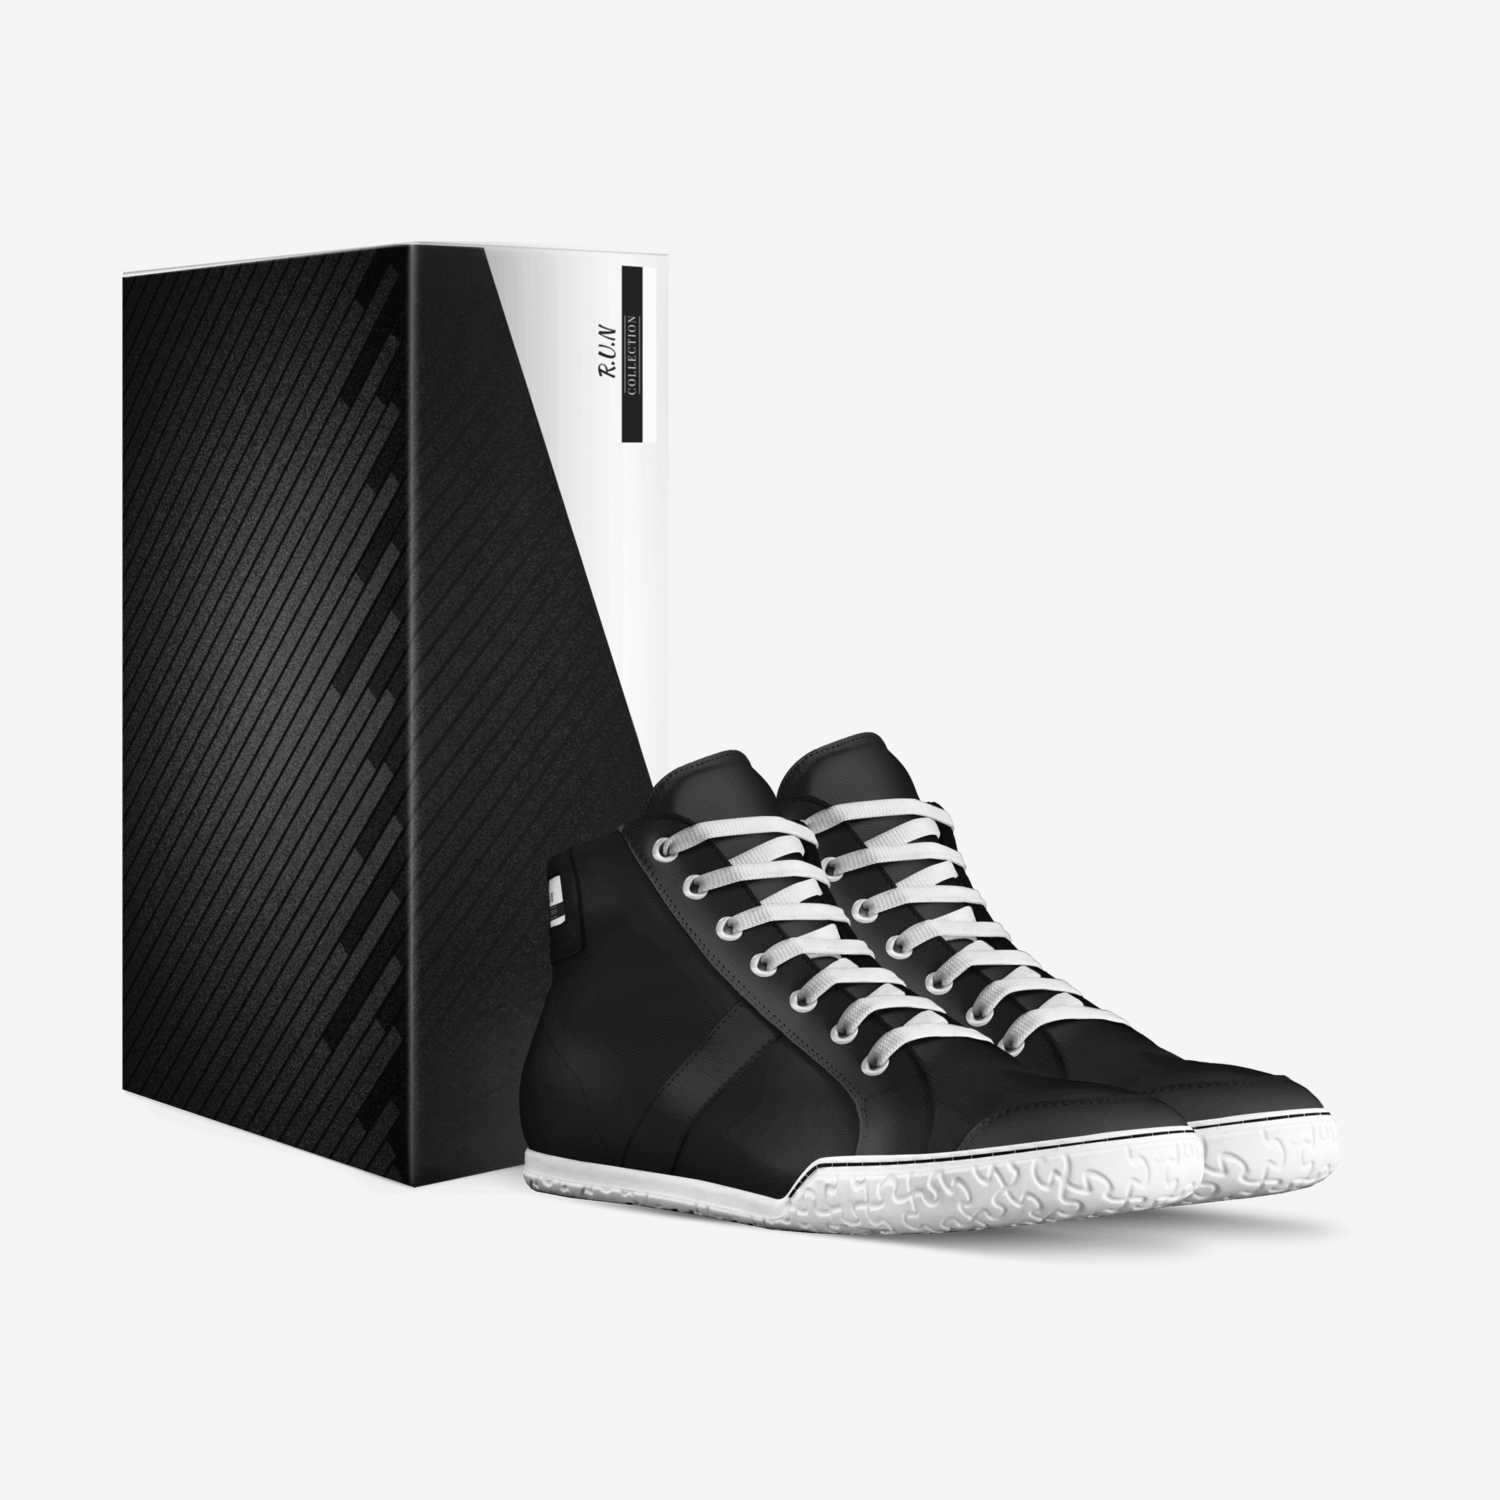 R.U.N custom made in Italy shoes by Vladimir | Box view